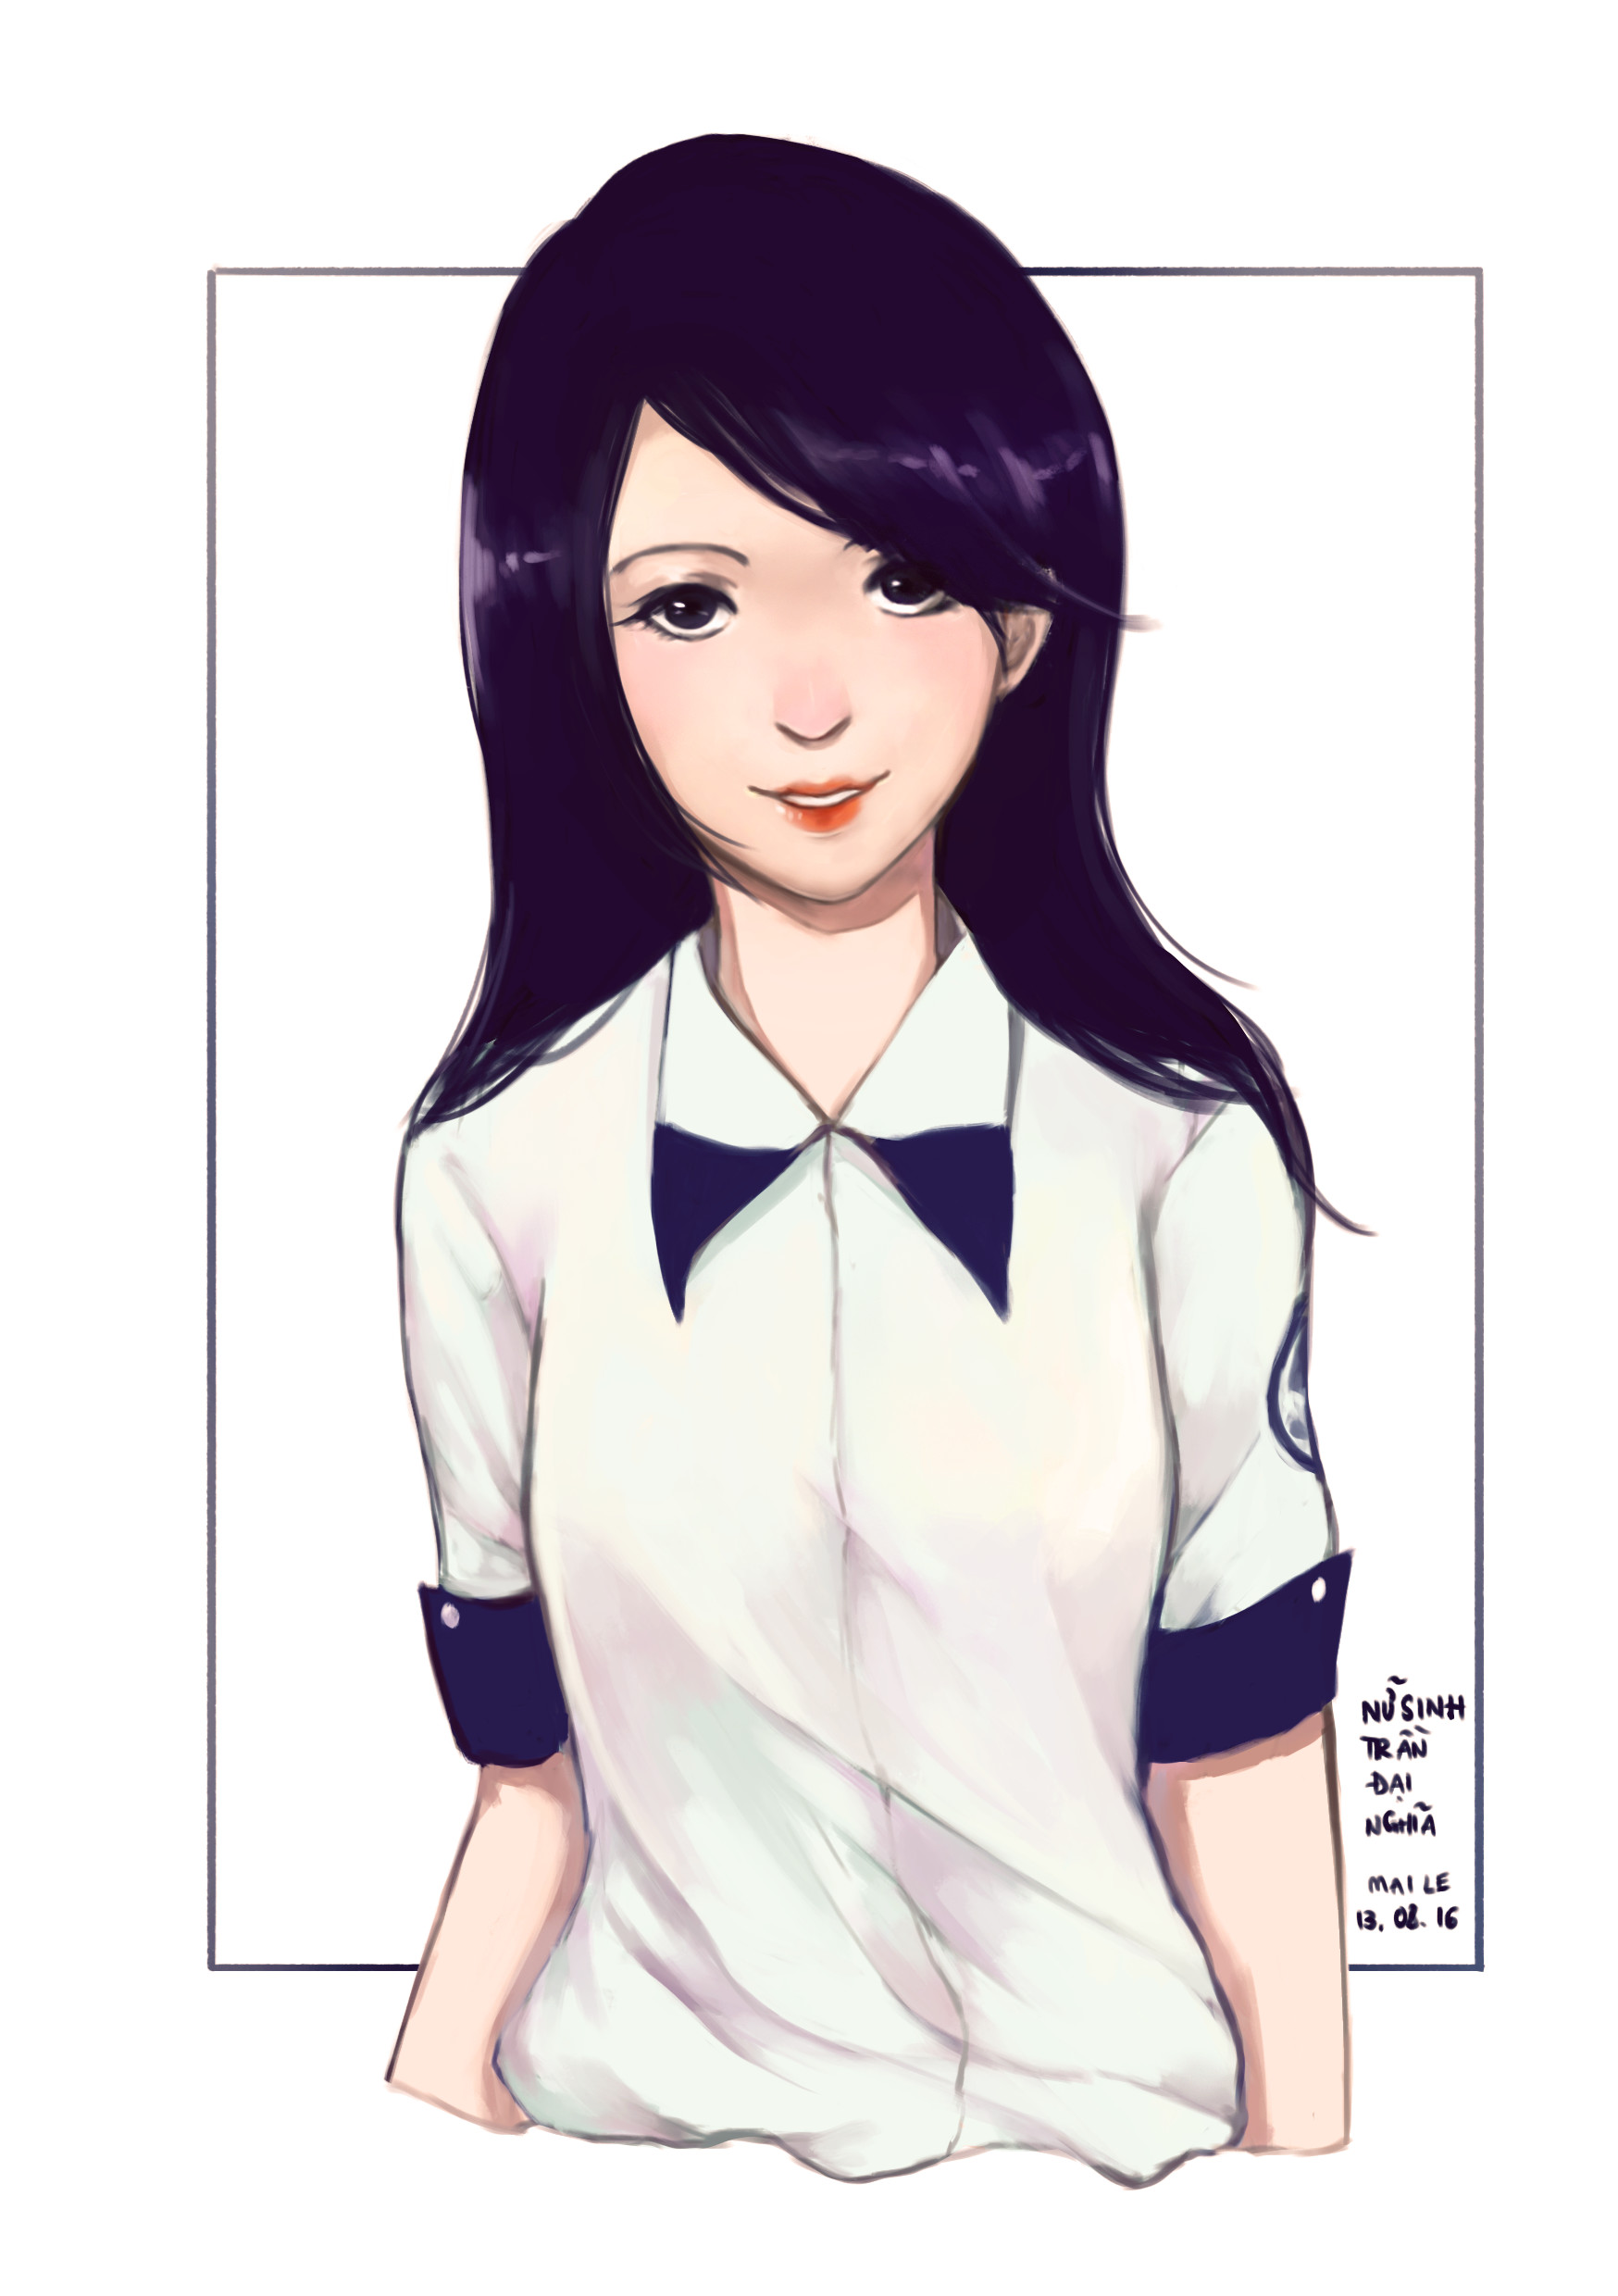 ArtStation - Highschool girl 2